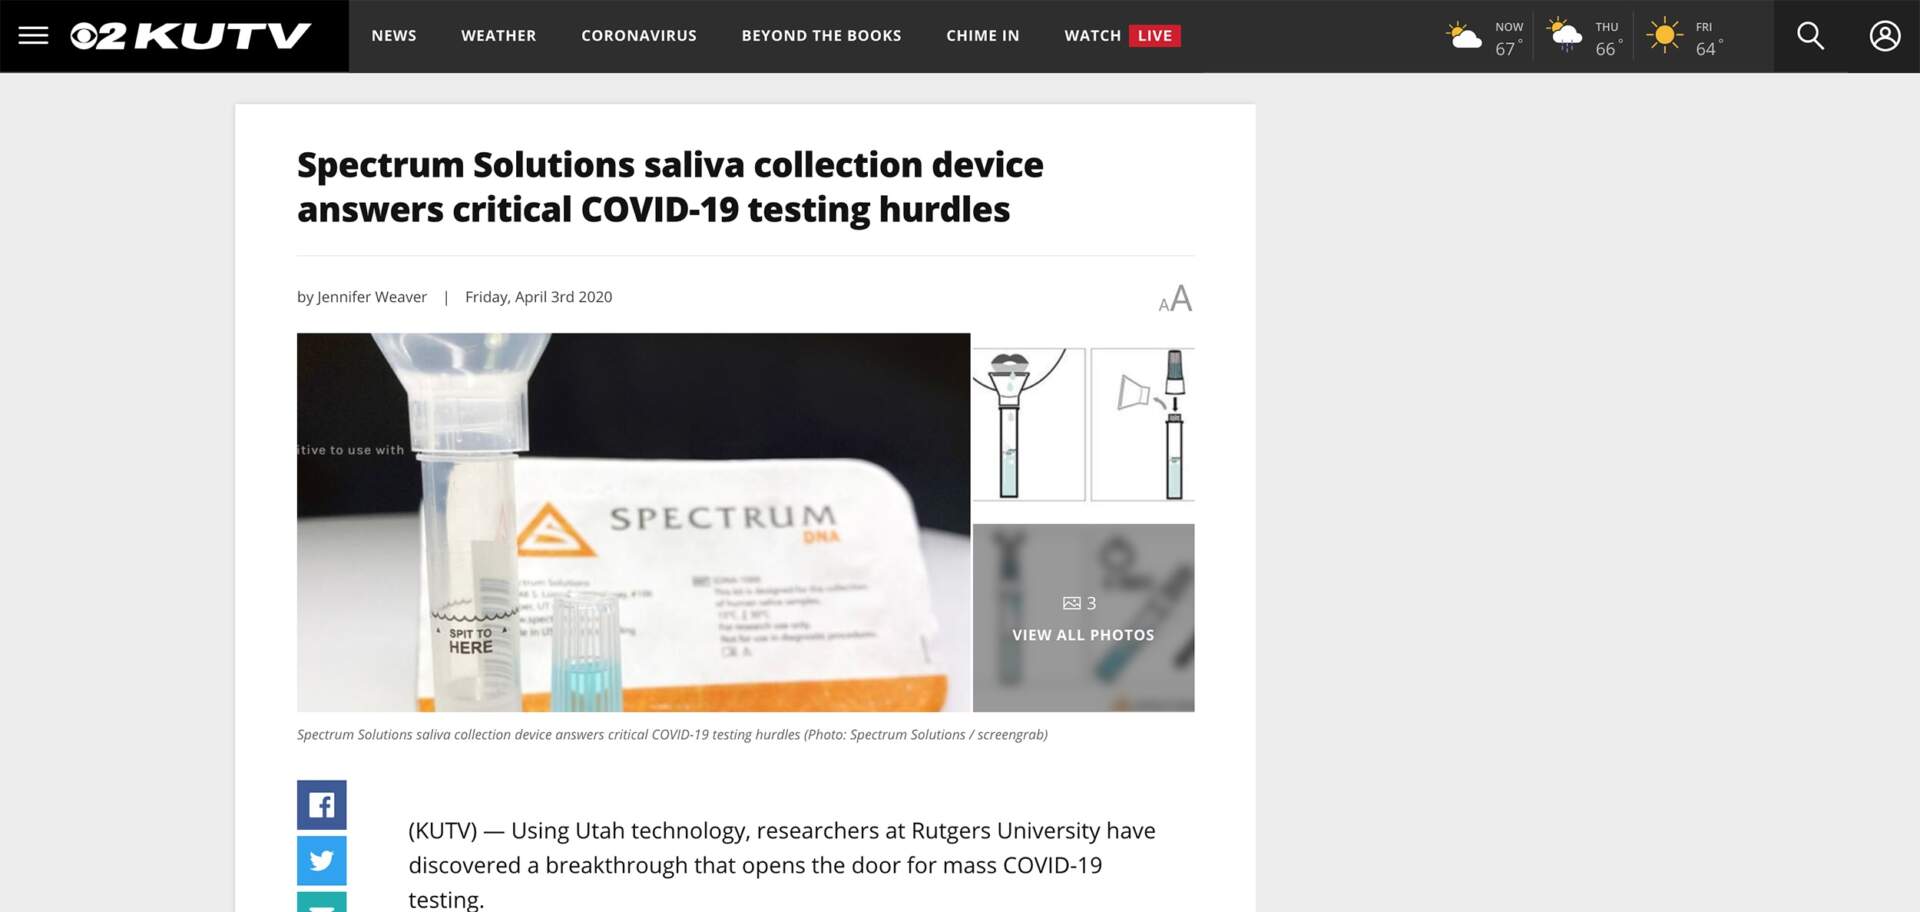 2KUTV News- Spectrum Solutions Saliva Collection for COVID-19 Testing